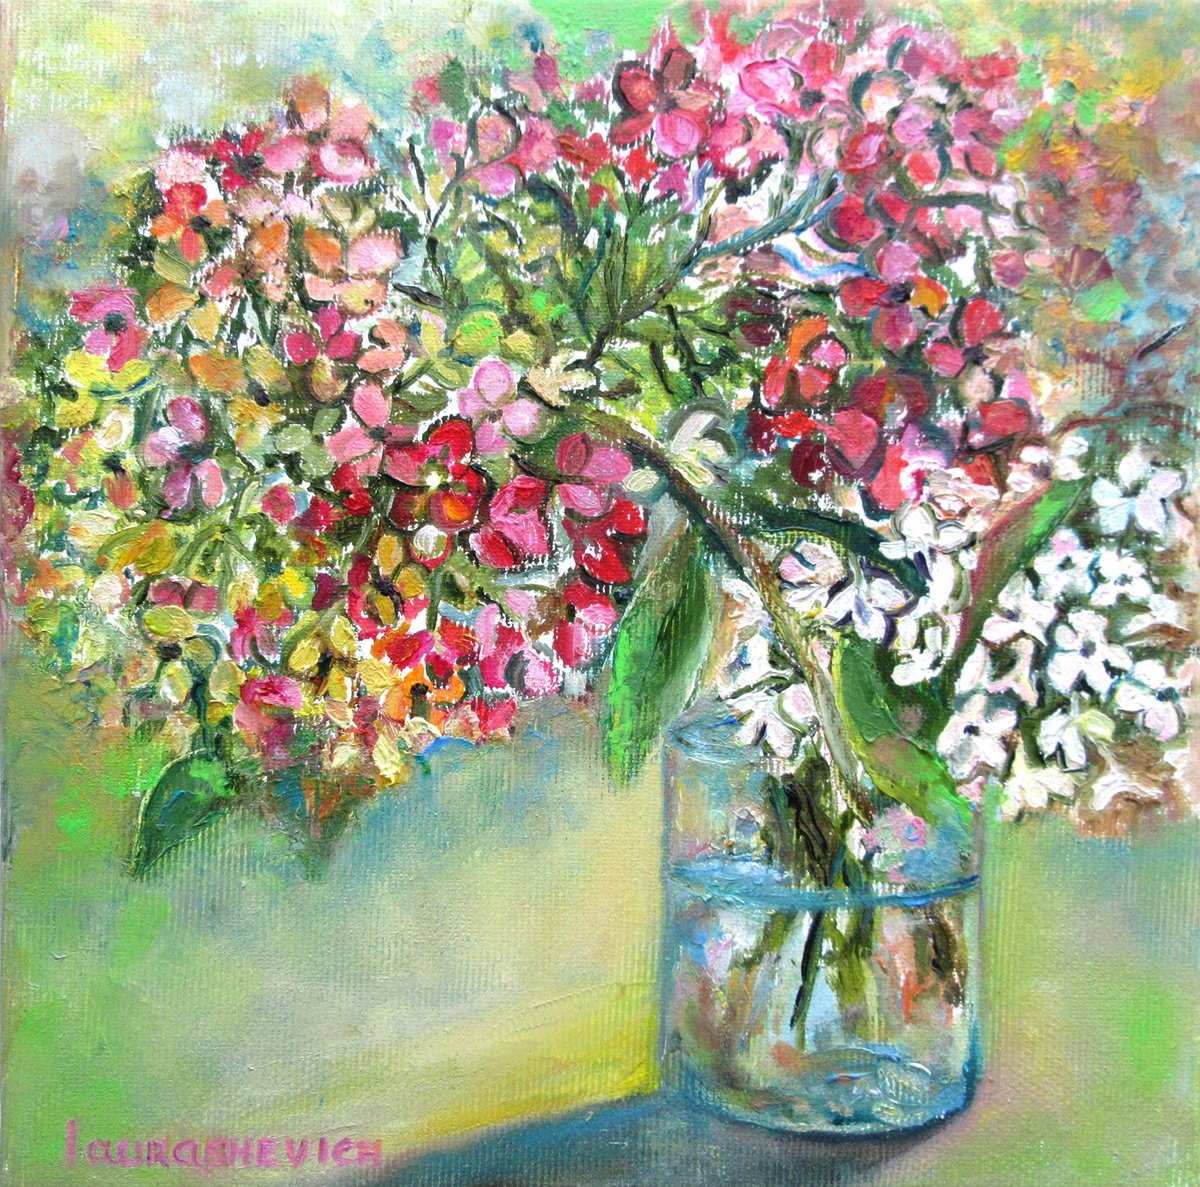 Flower mood / Small Oil Painting 20x20cm. by Katia Ricci